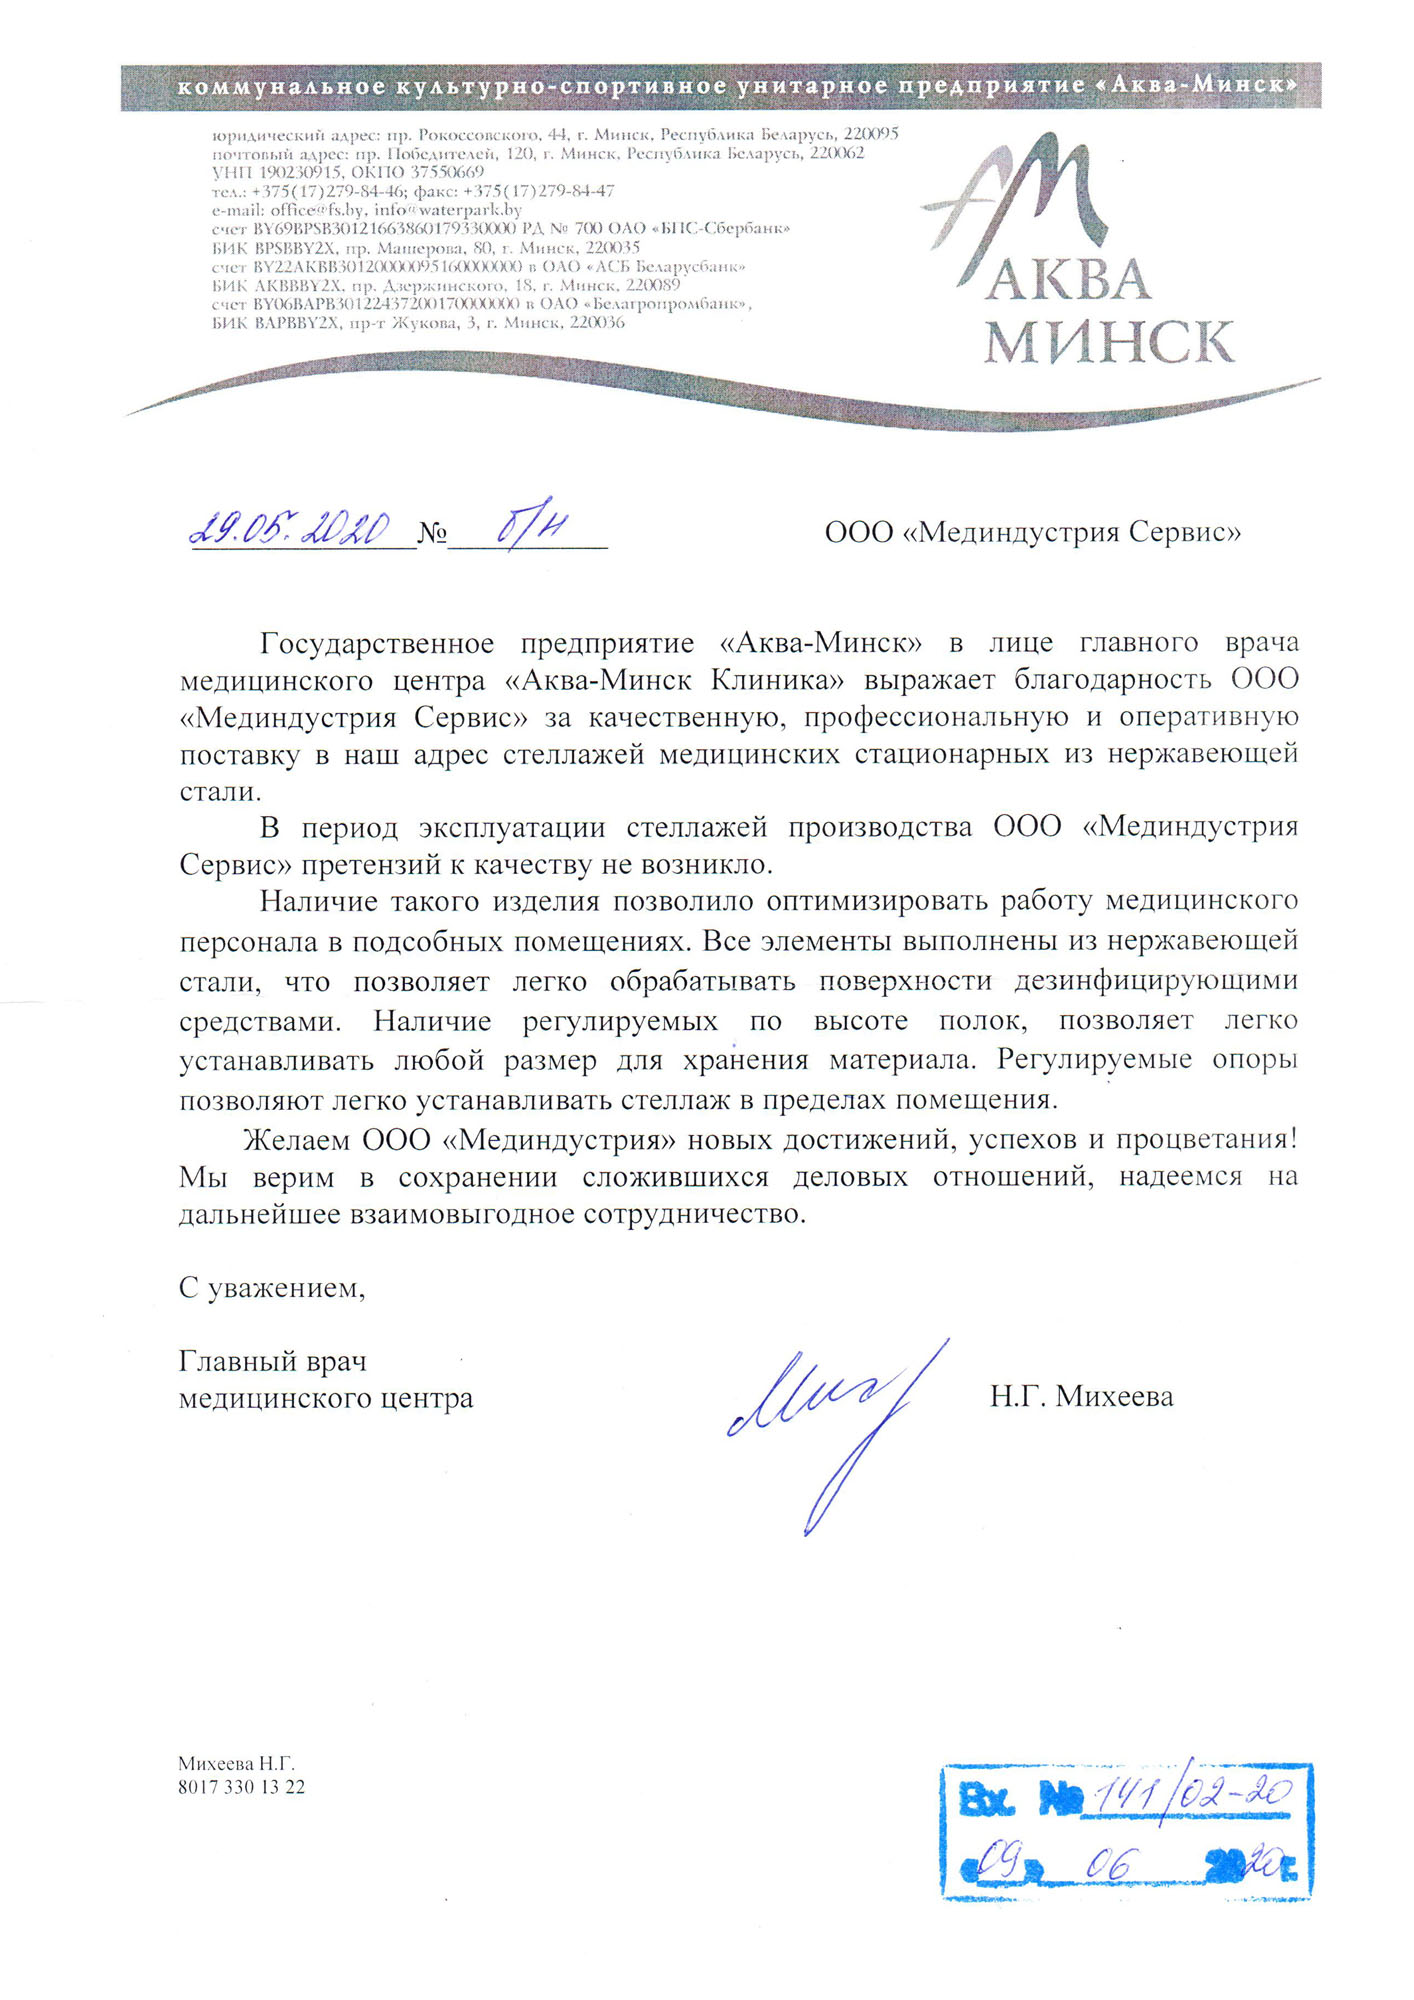 Аква-Минск о медицинских стеллажах 